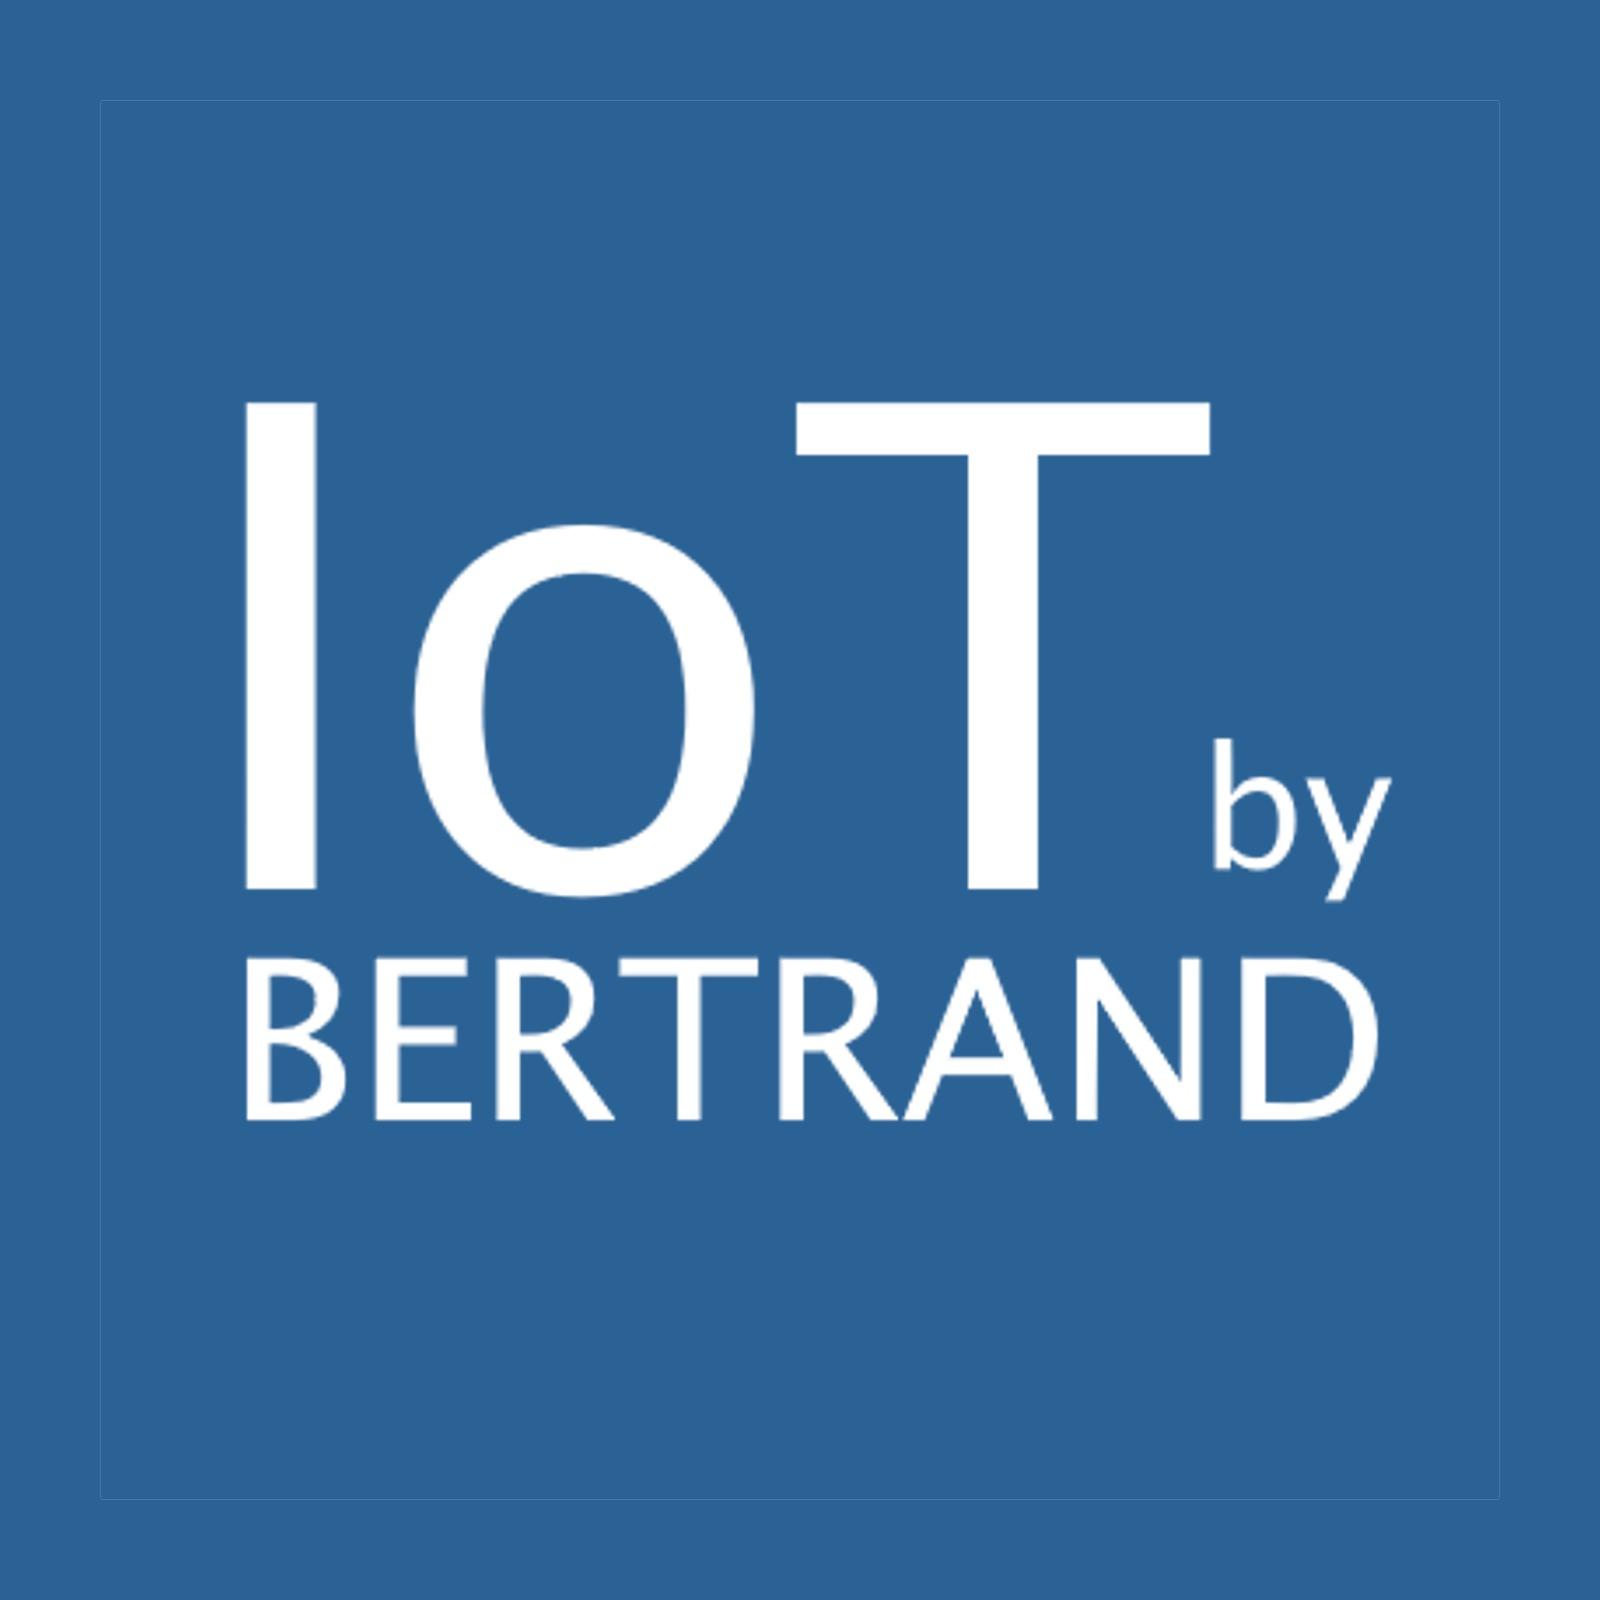 IoT by Bertrand